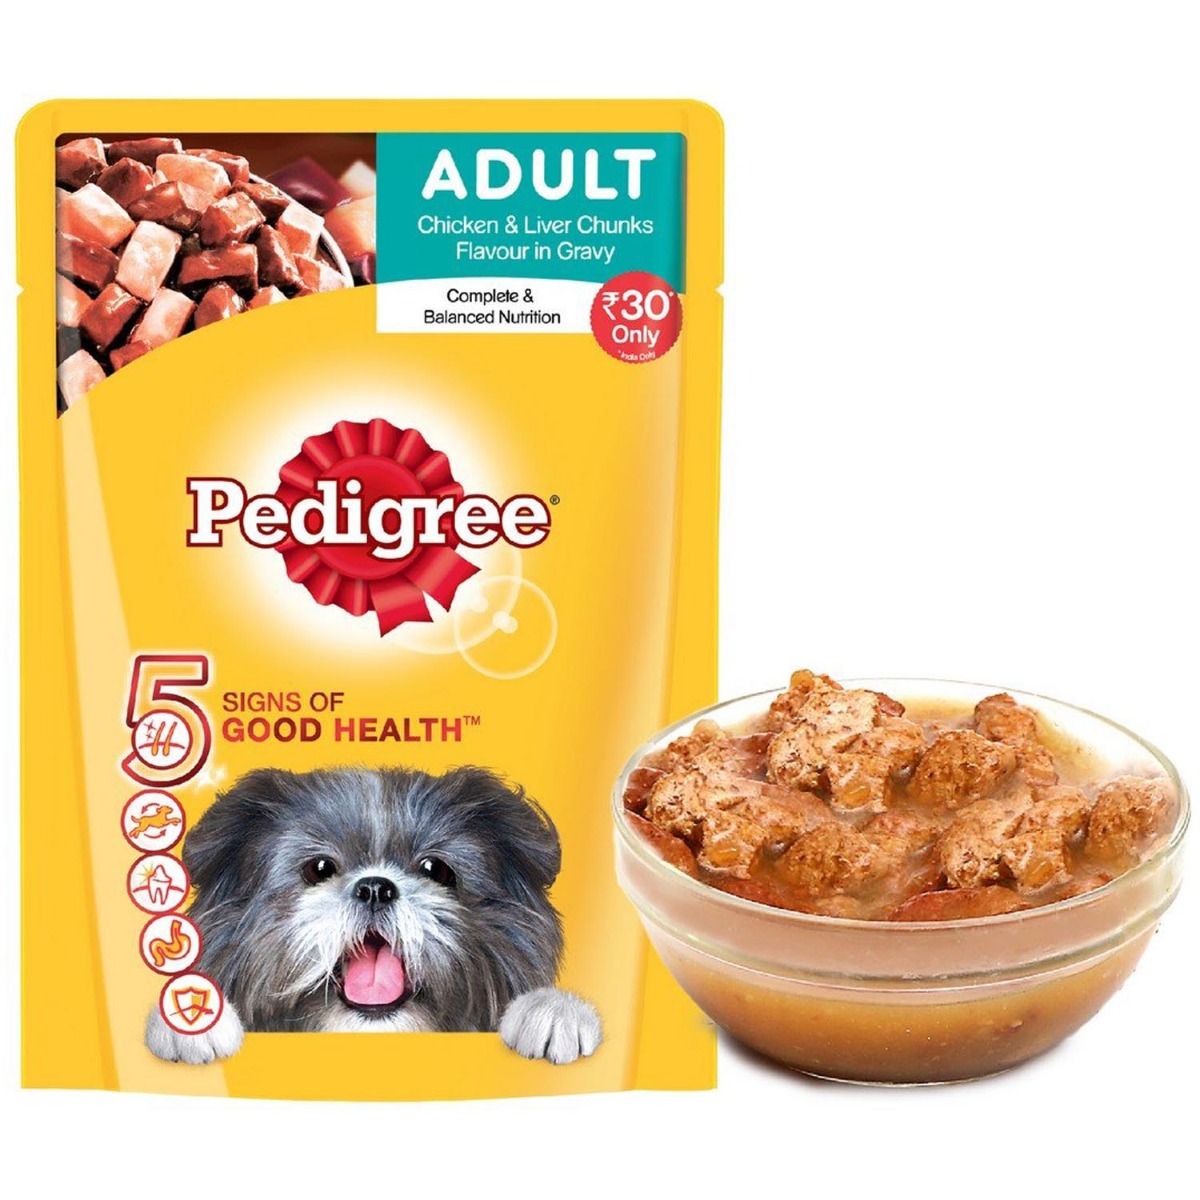 Pedigree Chicken & Liver Chunks Adult Dog Food, 80 gm, Pack of 1 